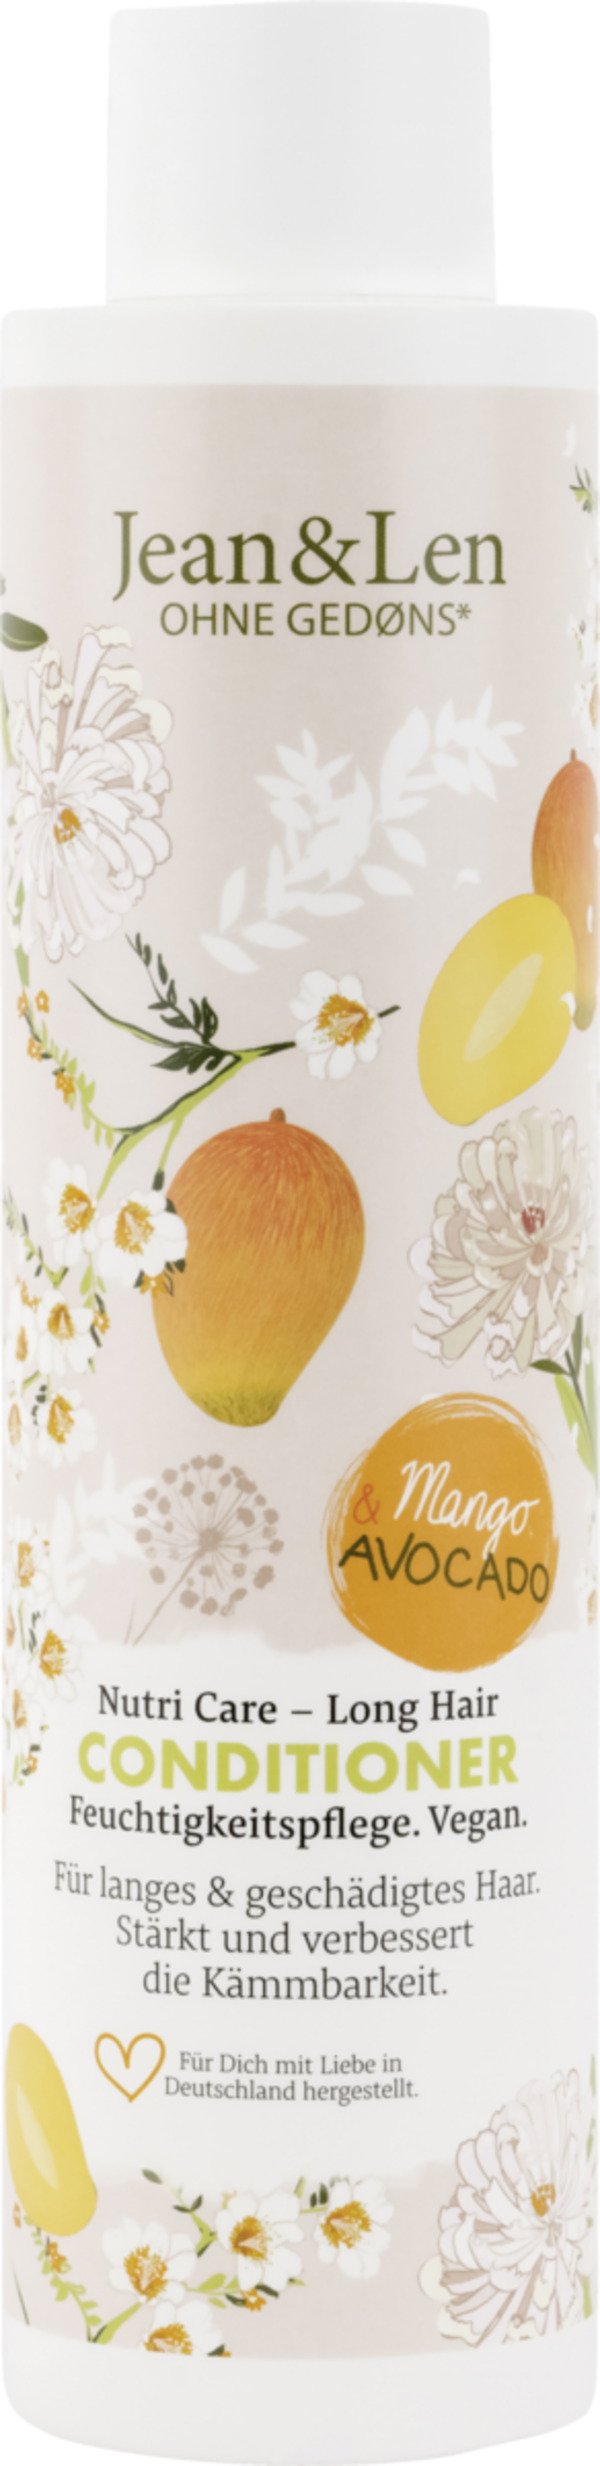 Bild 1 von Jean&Len Nutri Care – Long Hair Conditioner Mango & Avoc 13.30 EUR/1 l